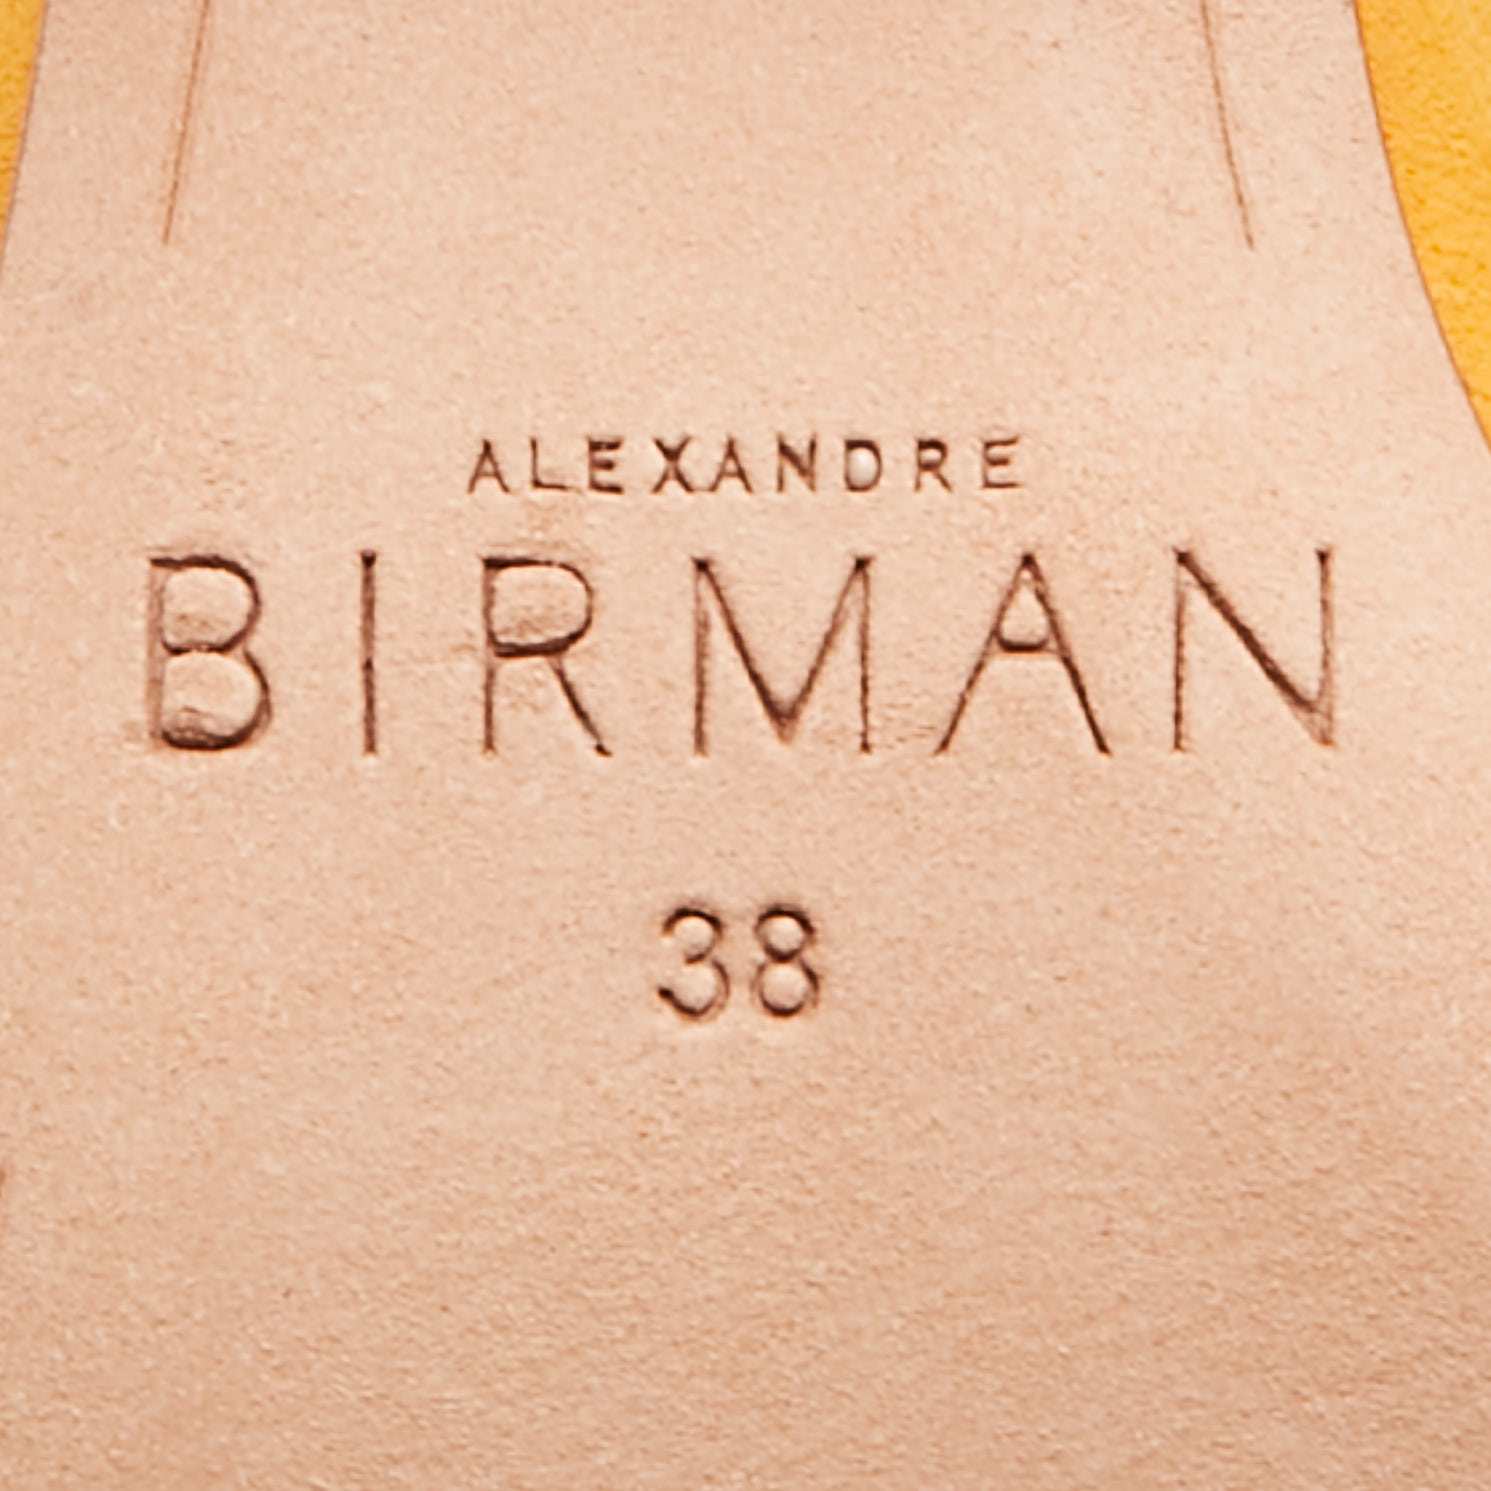 Alexandre Birman Yellow/Beige Suede Lolita Ankle Tie Sandals Size 38